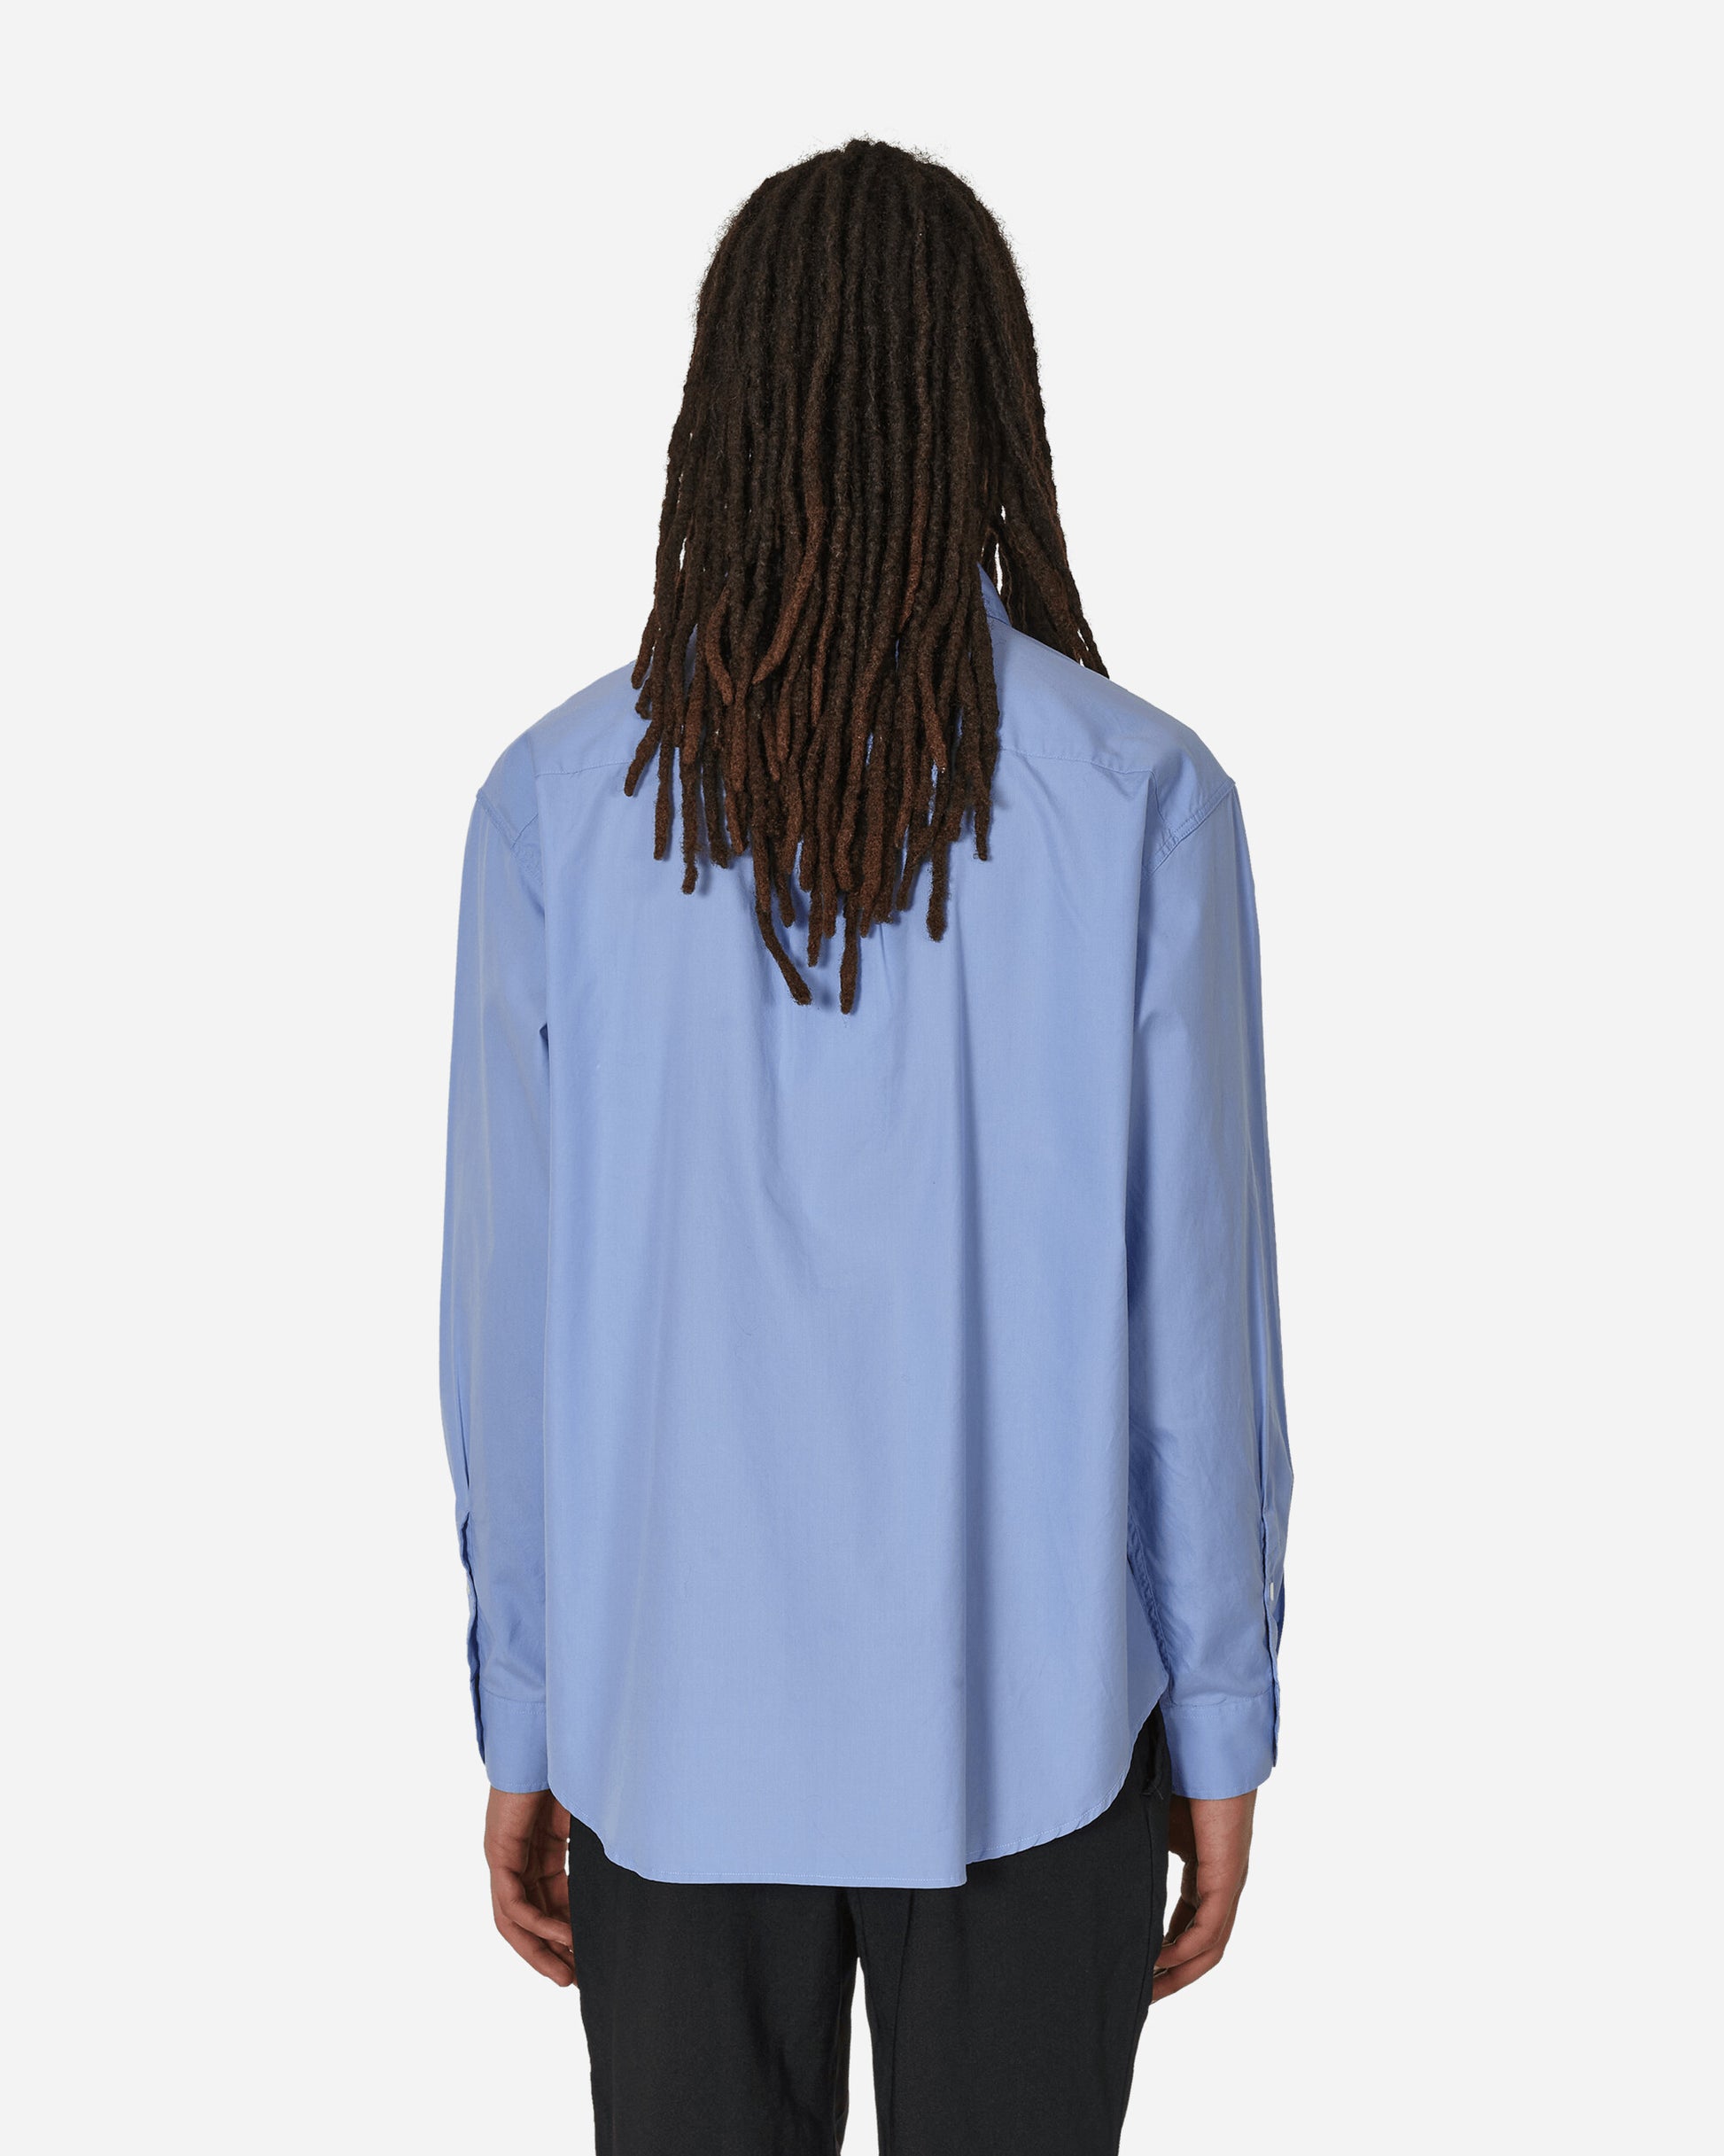 mfpen Generoius Shirt Blue Oxford Shirts Longsleeve Shirt M124-09  1